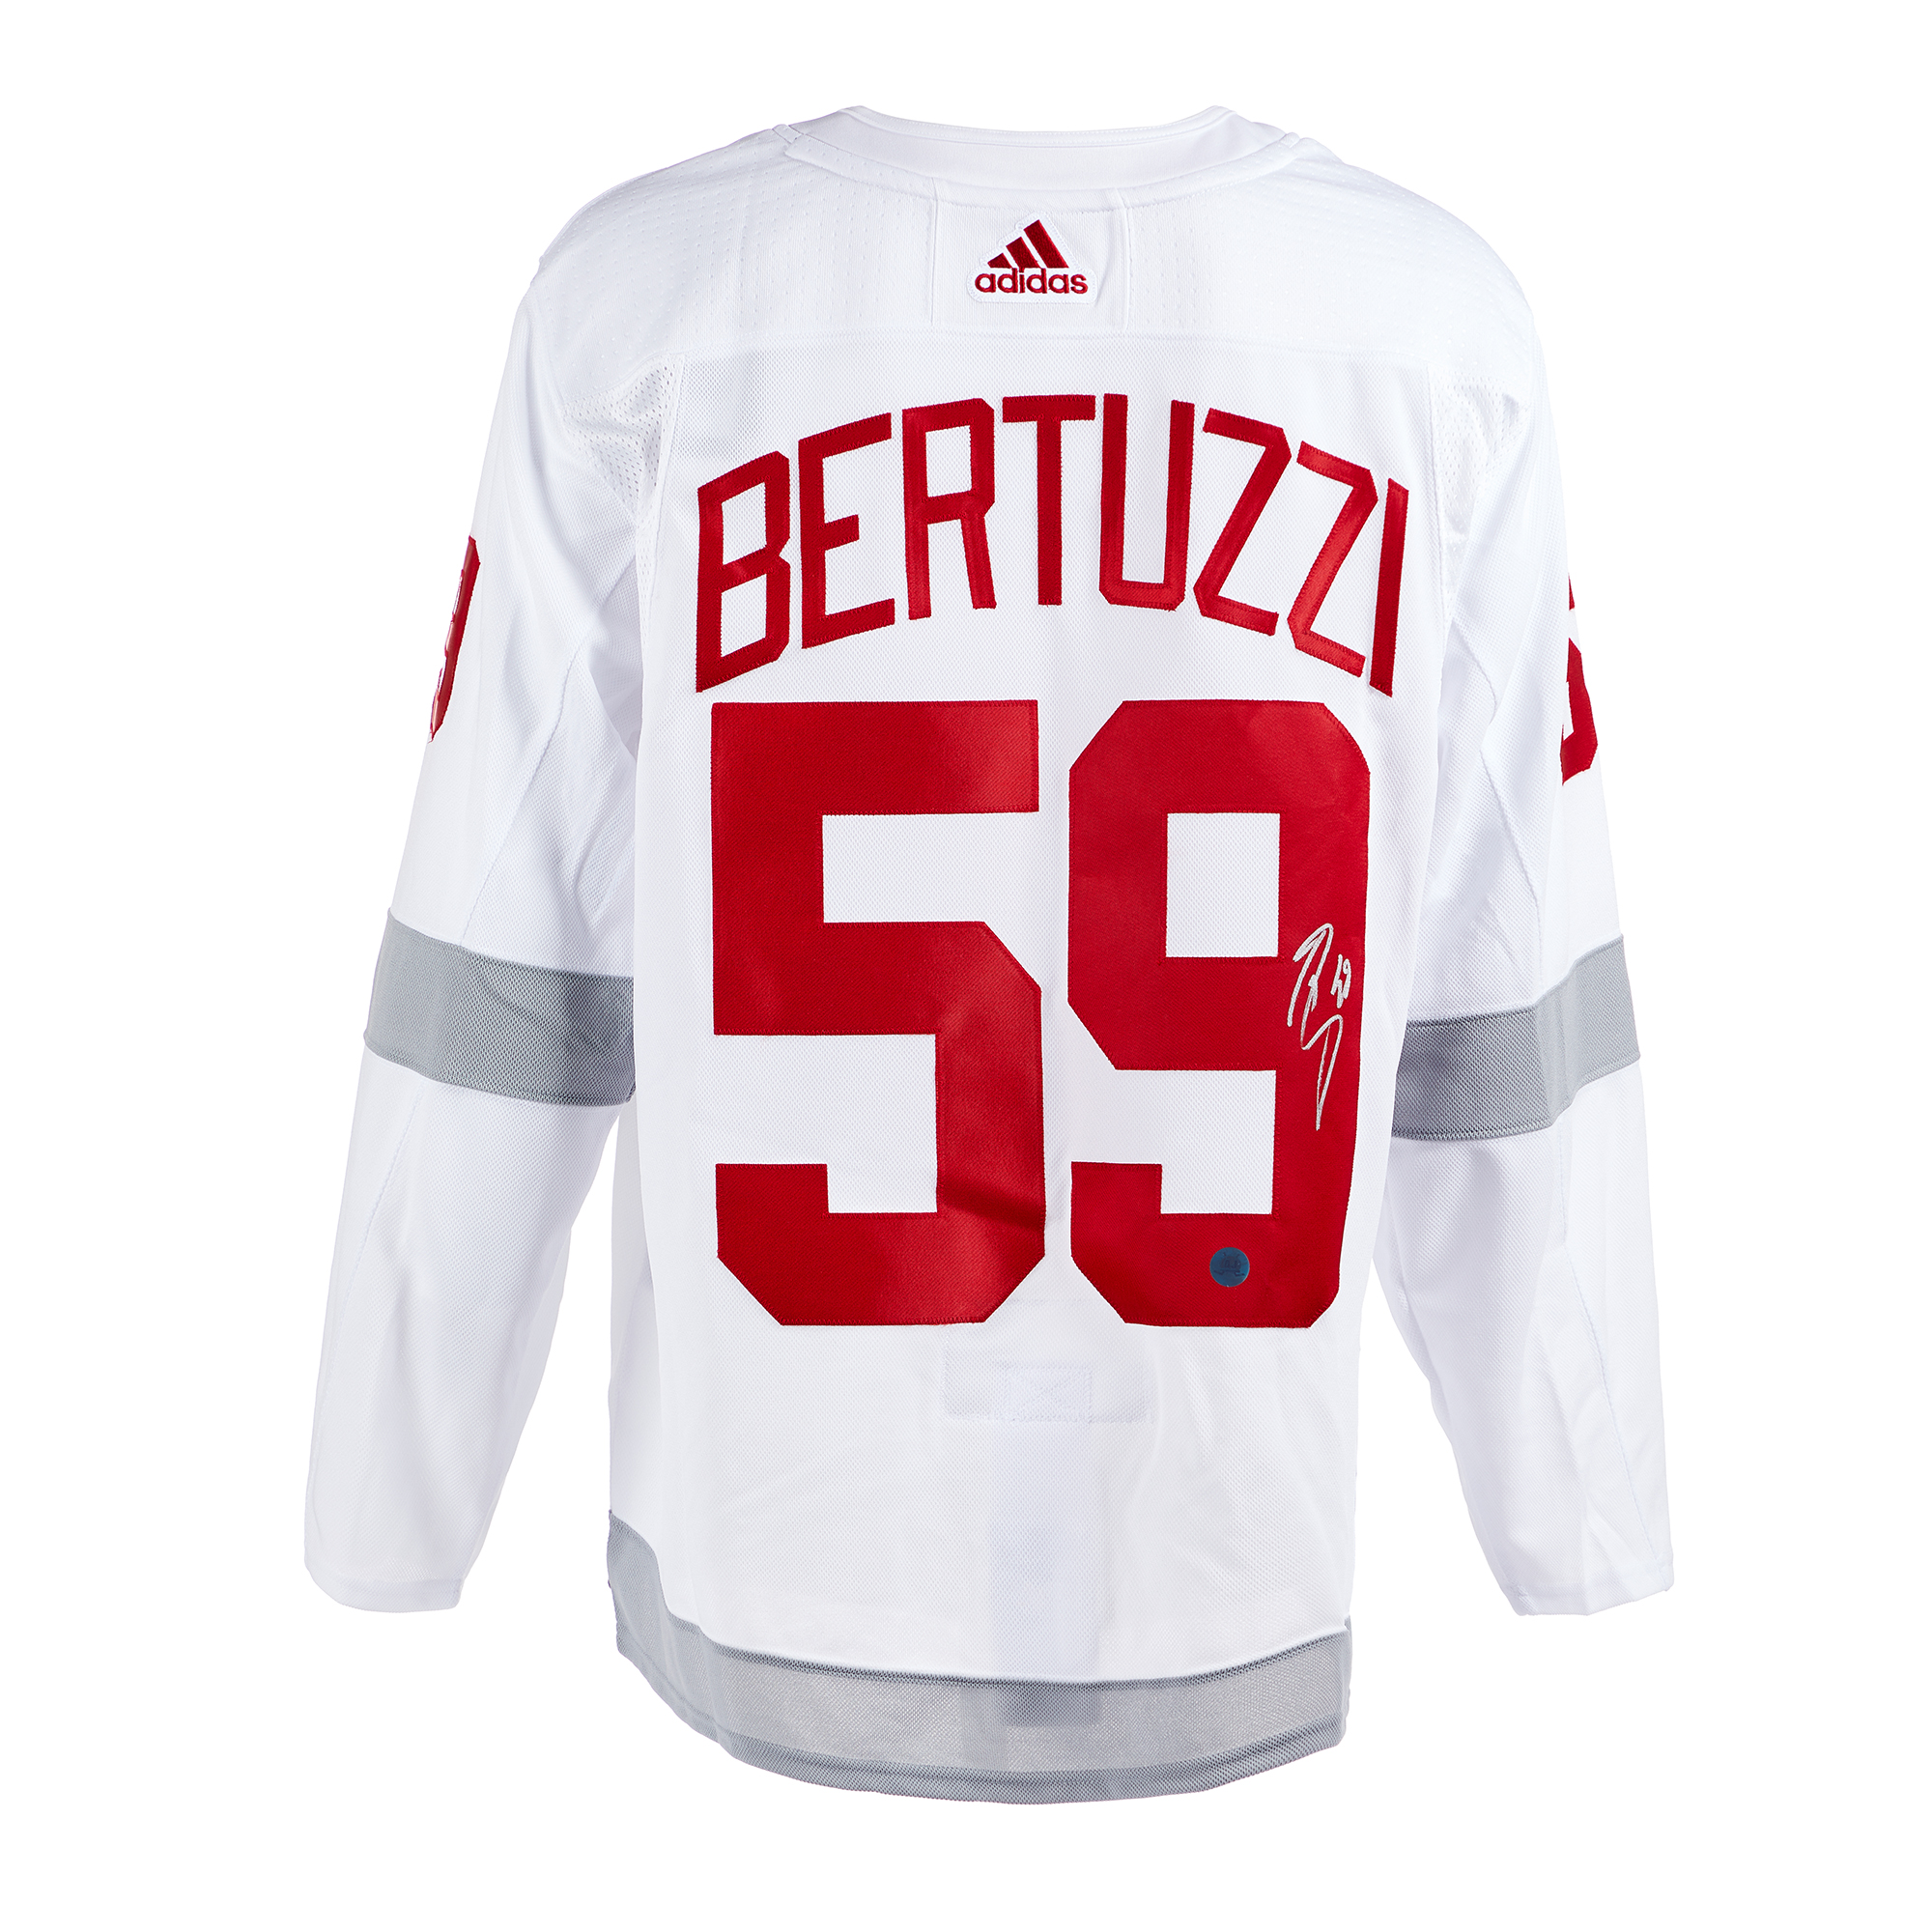 TYLER BERTUZZI Signed Detroit Red Wings Red Reebok Jersey - NHL